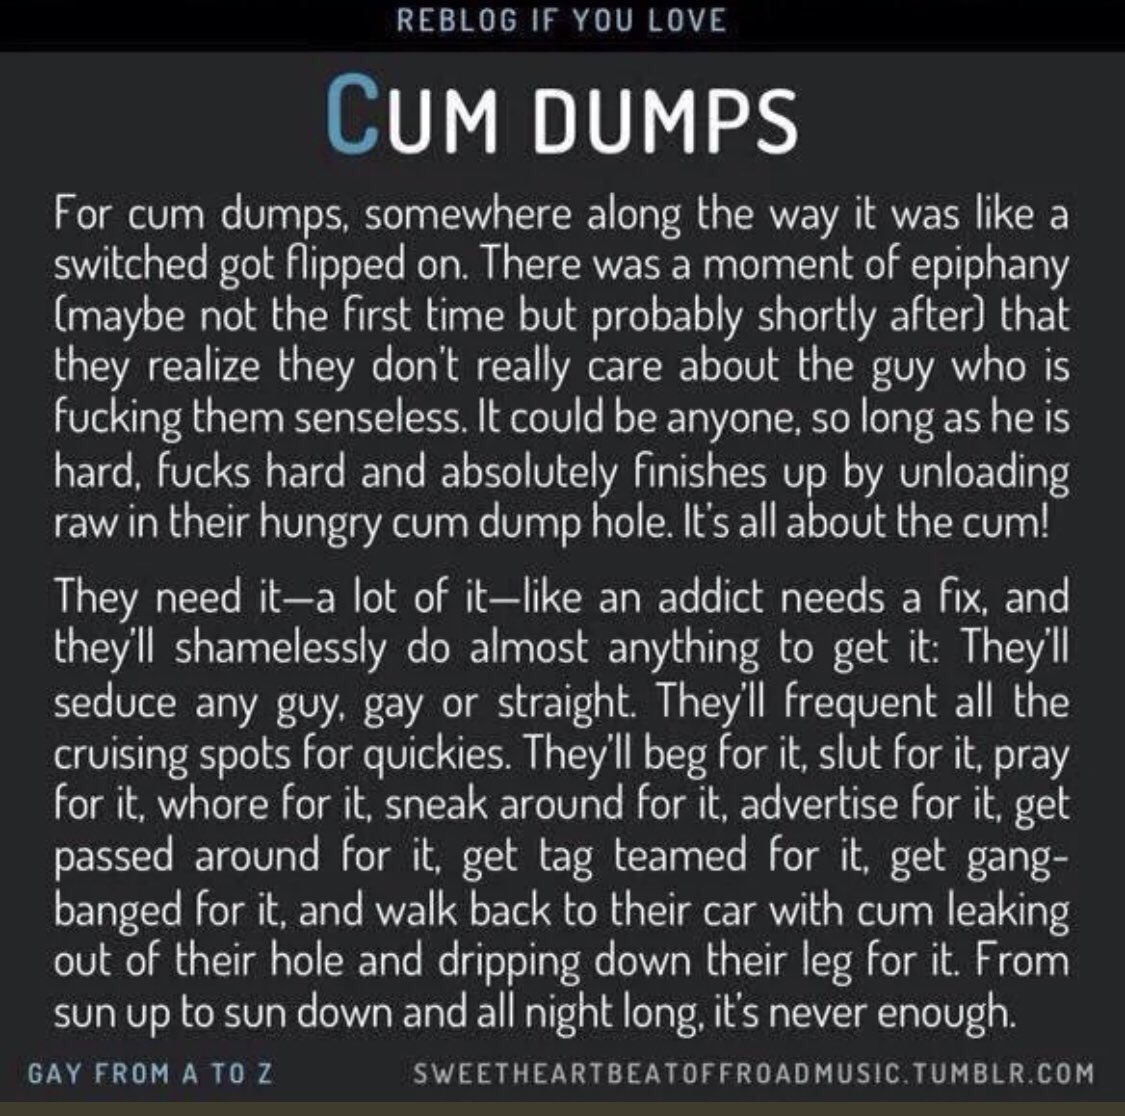 Gay cumdump stories